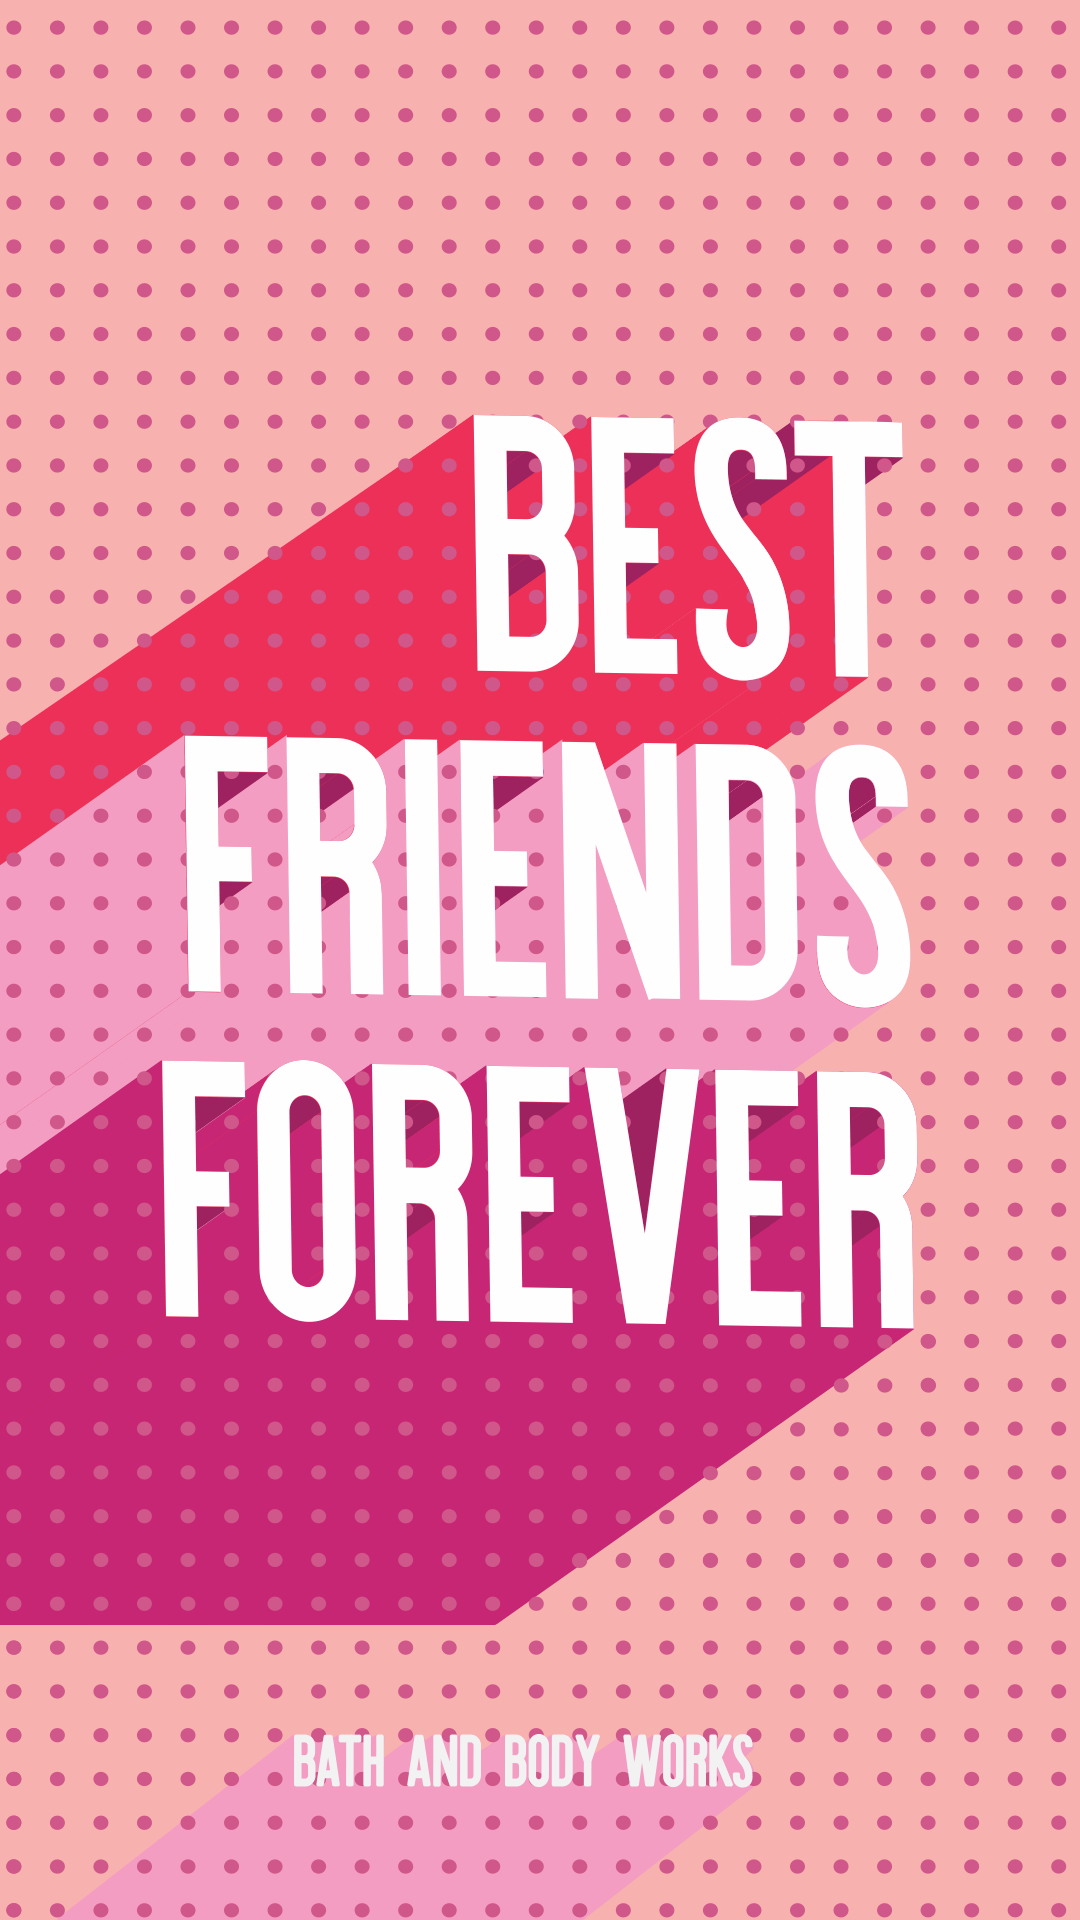 Best Friends Forever iPhone Wallpaper. Best friend wallpaper, Best friends forever, Friends forever